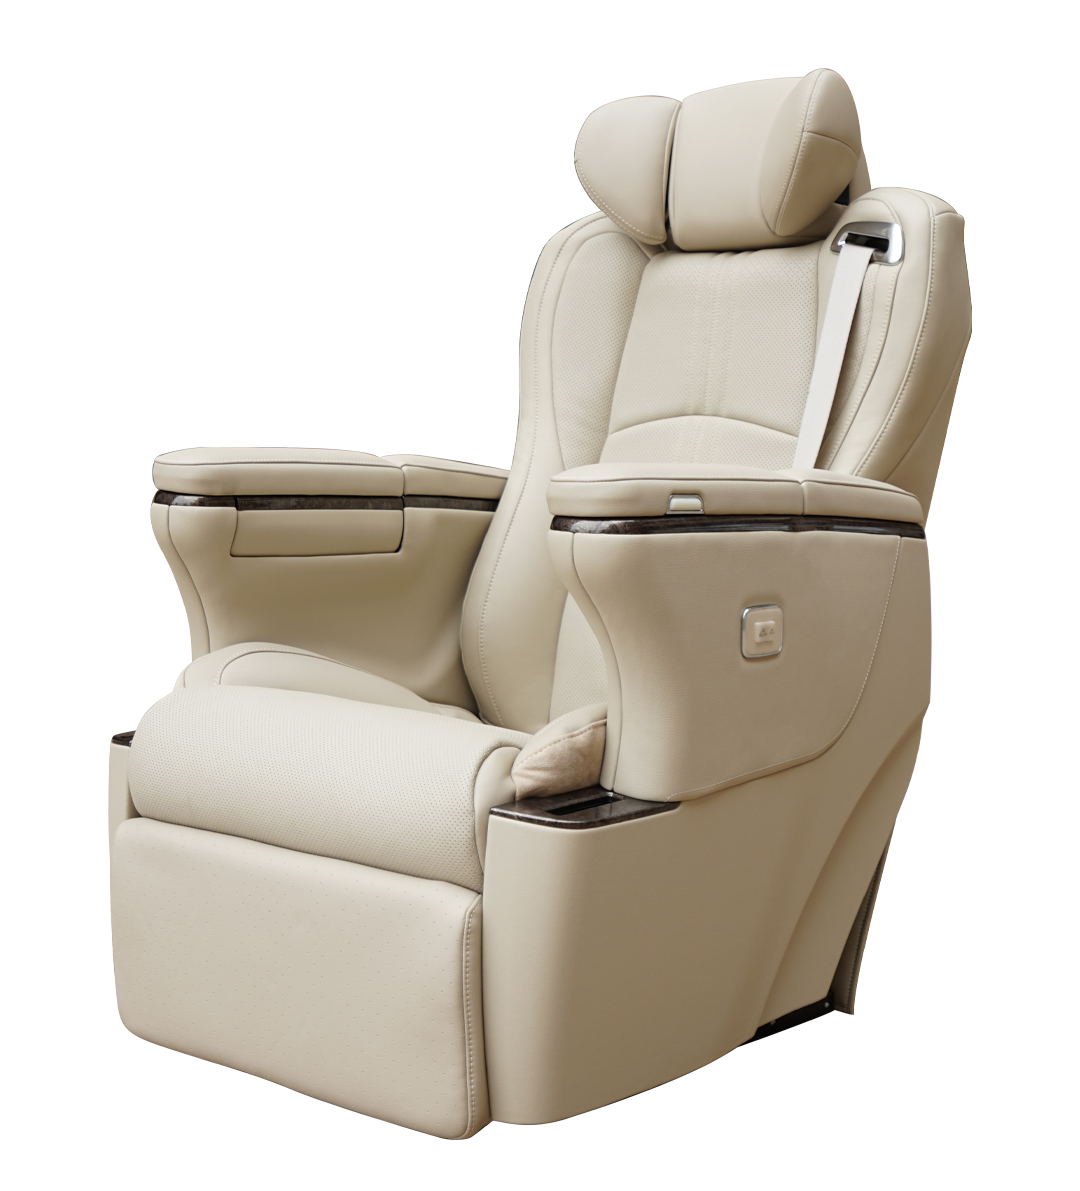 An Interior Design Accessories Electric Single ALPHARD Car Auto Seat